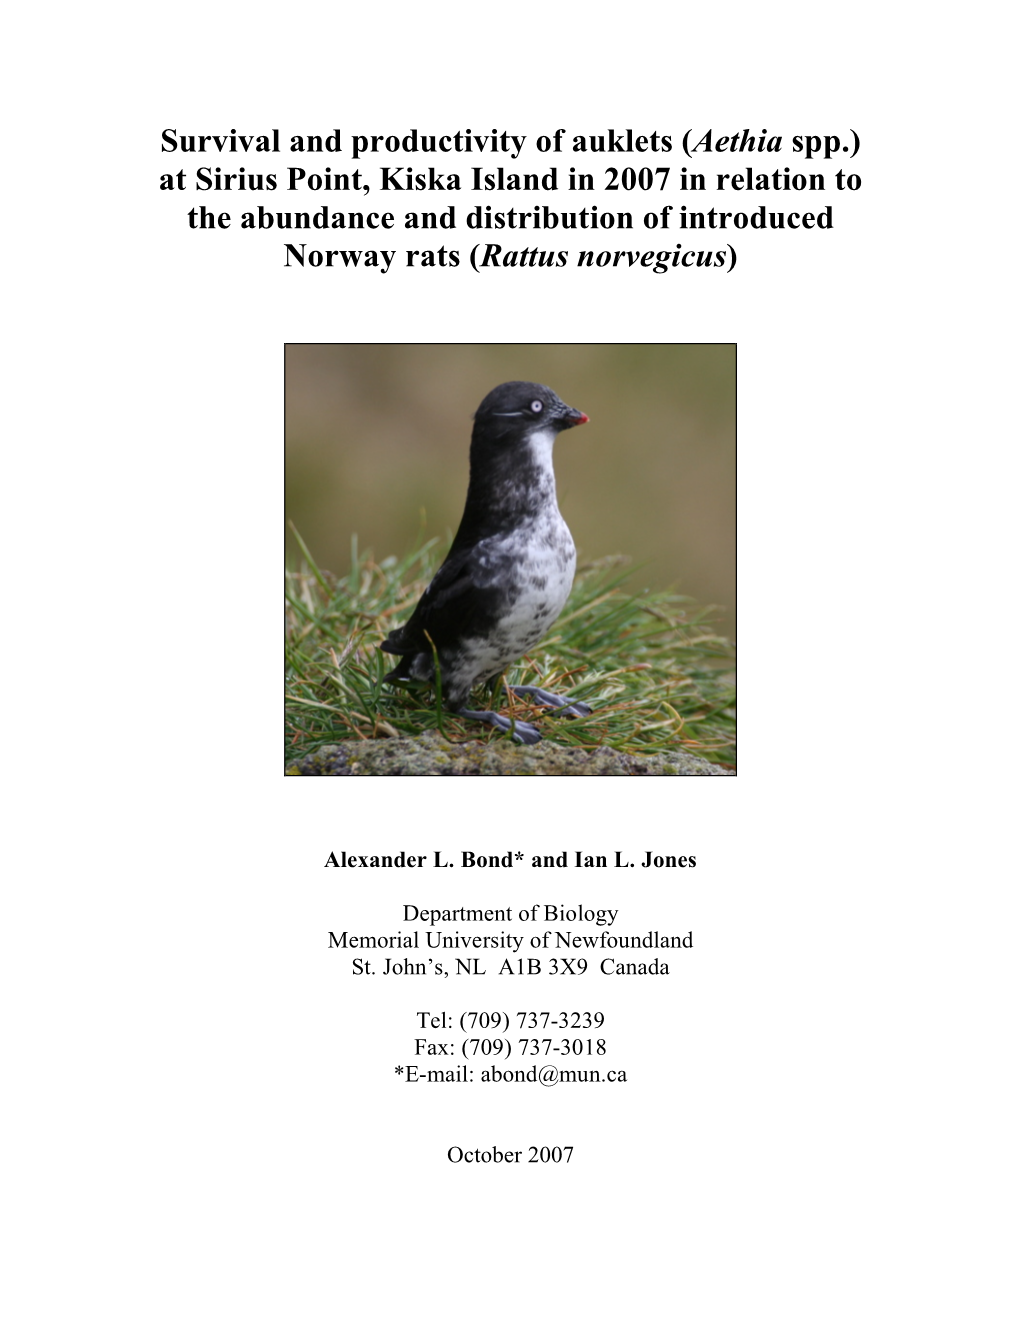 Survival and Productivity of Auklets (Aethia Spp.) at Sirius Point, Kiska